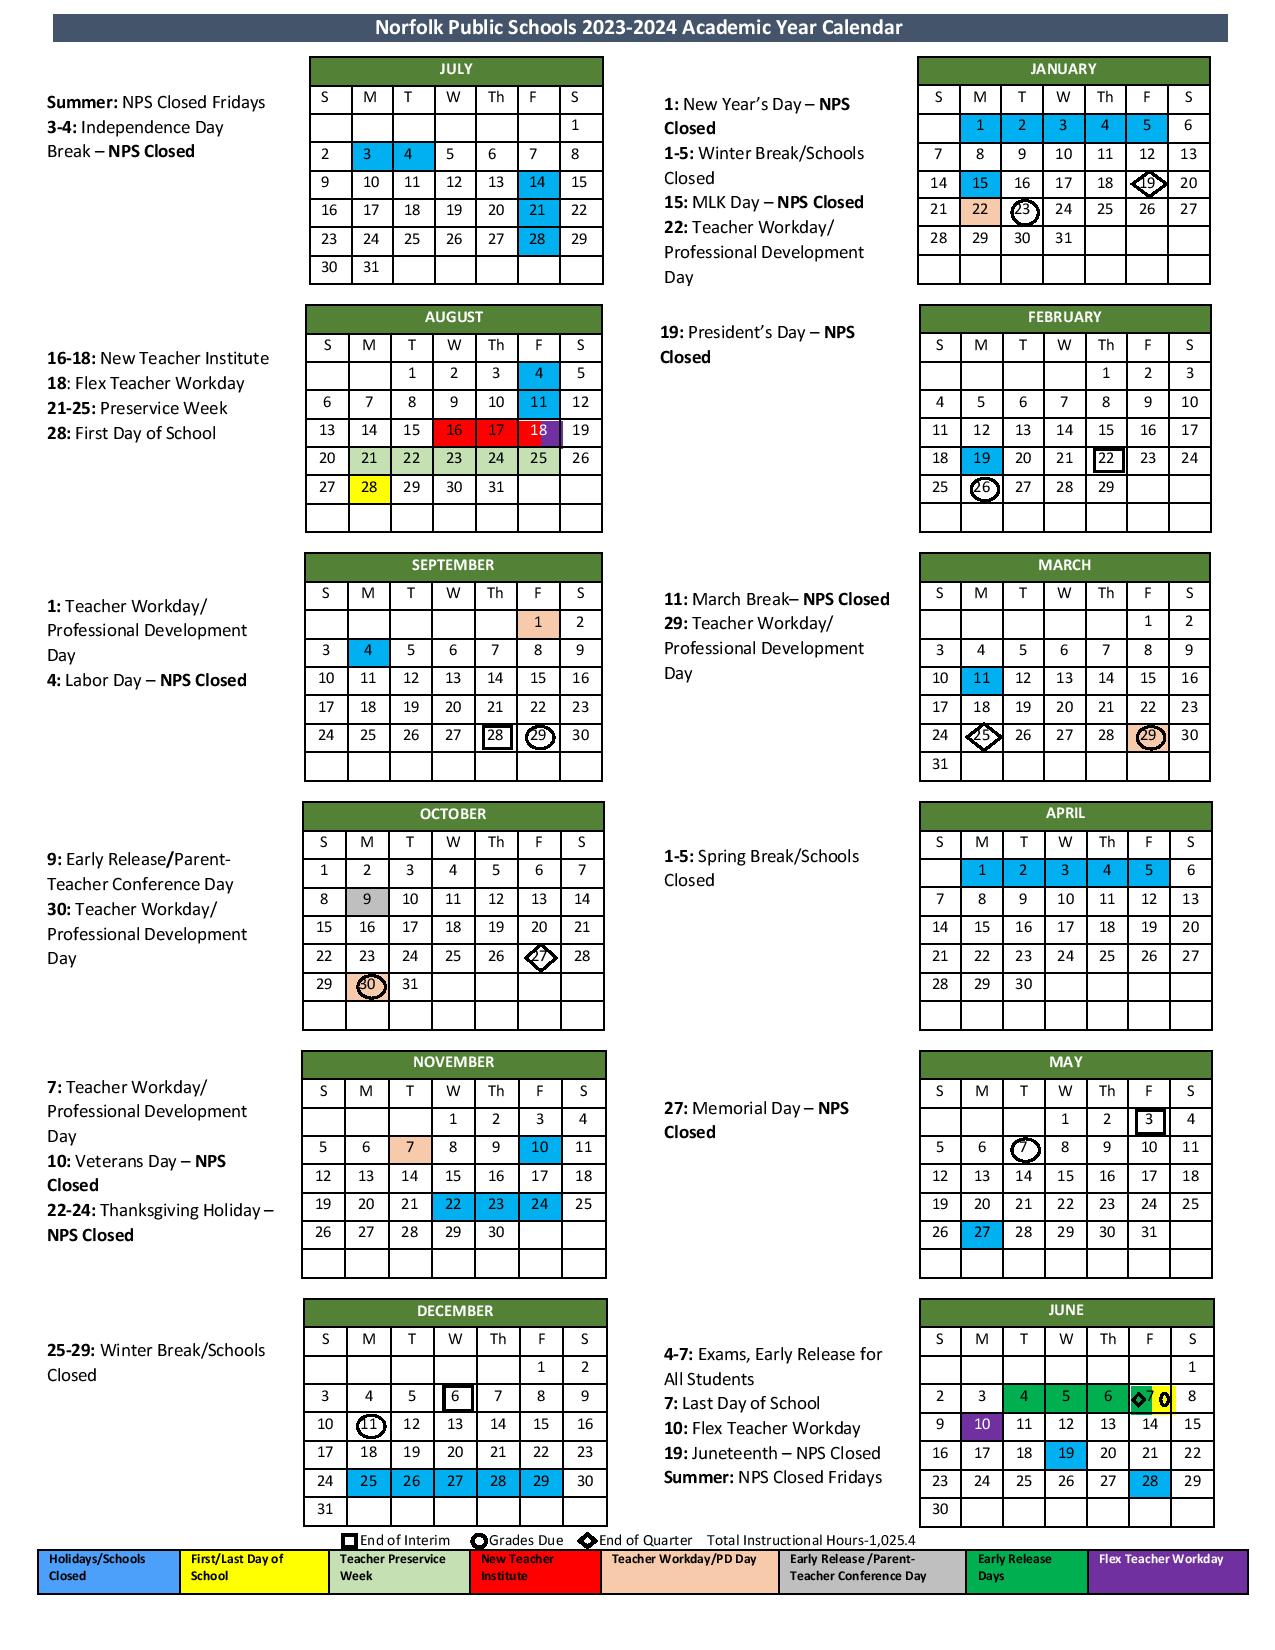 norfolk-public-schools-calendar-2023-2024-holidays-pdf